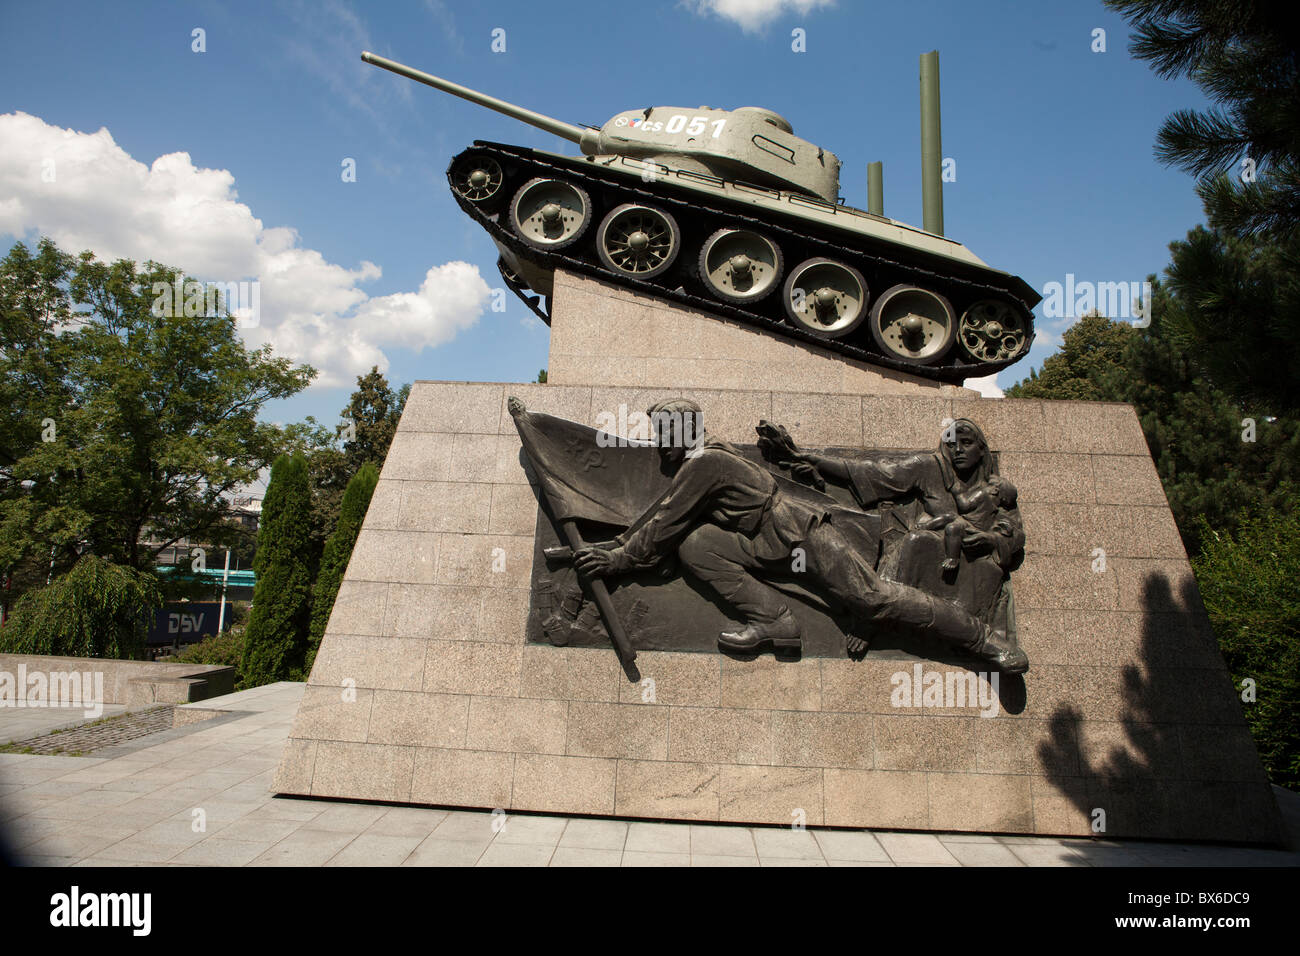 tank T-34 no. 051, The Liberation Monument, Ostrava Stock Photo - Alamy